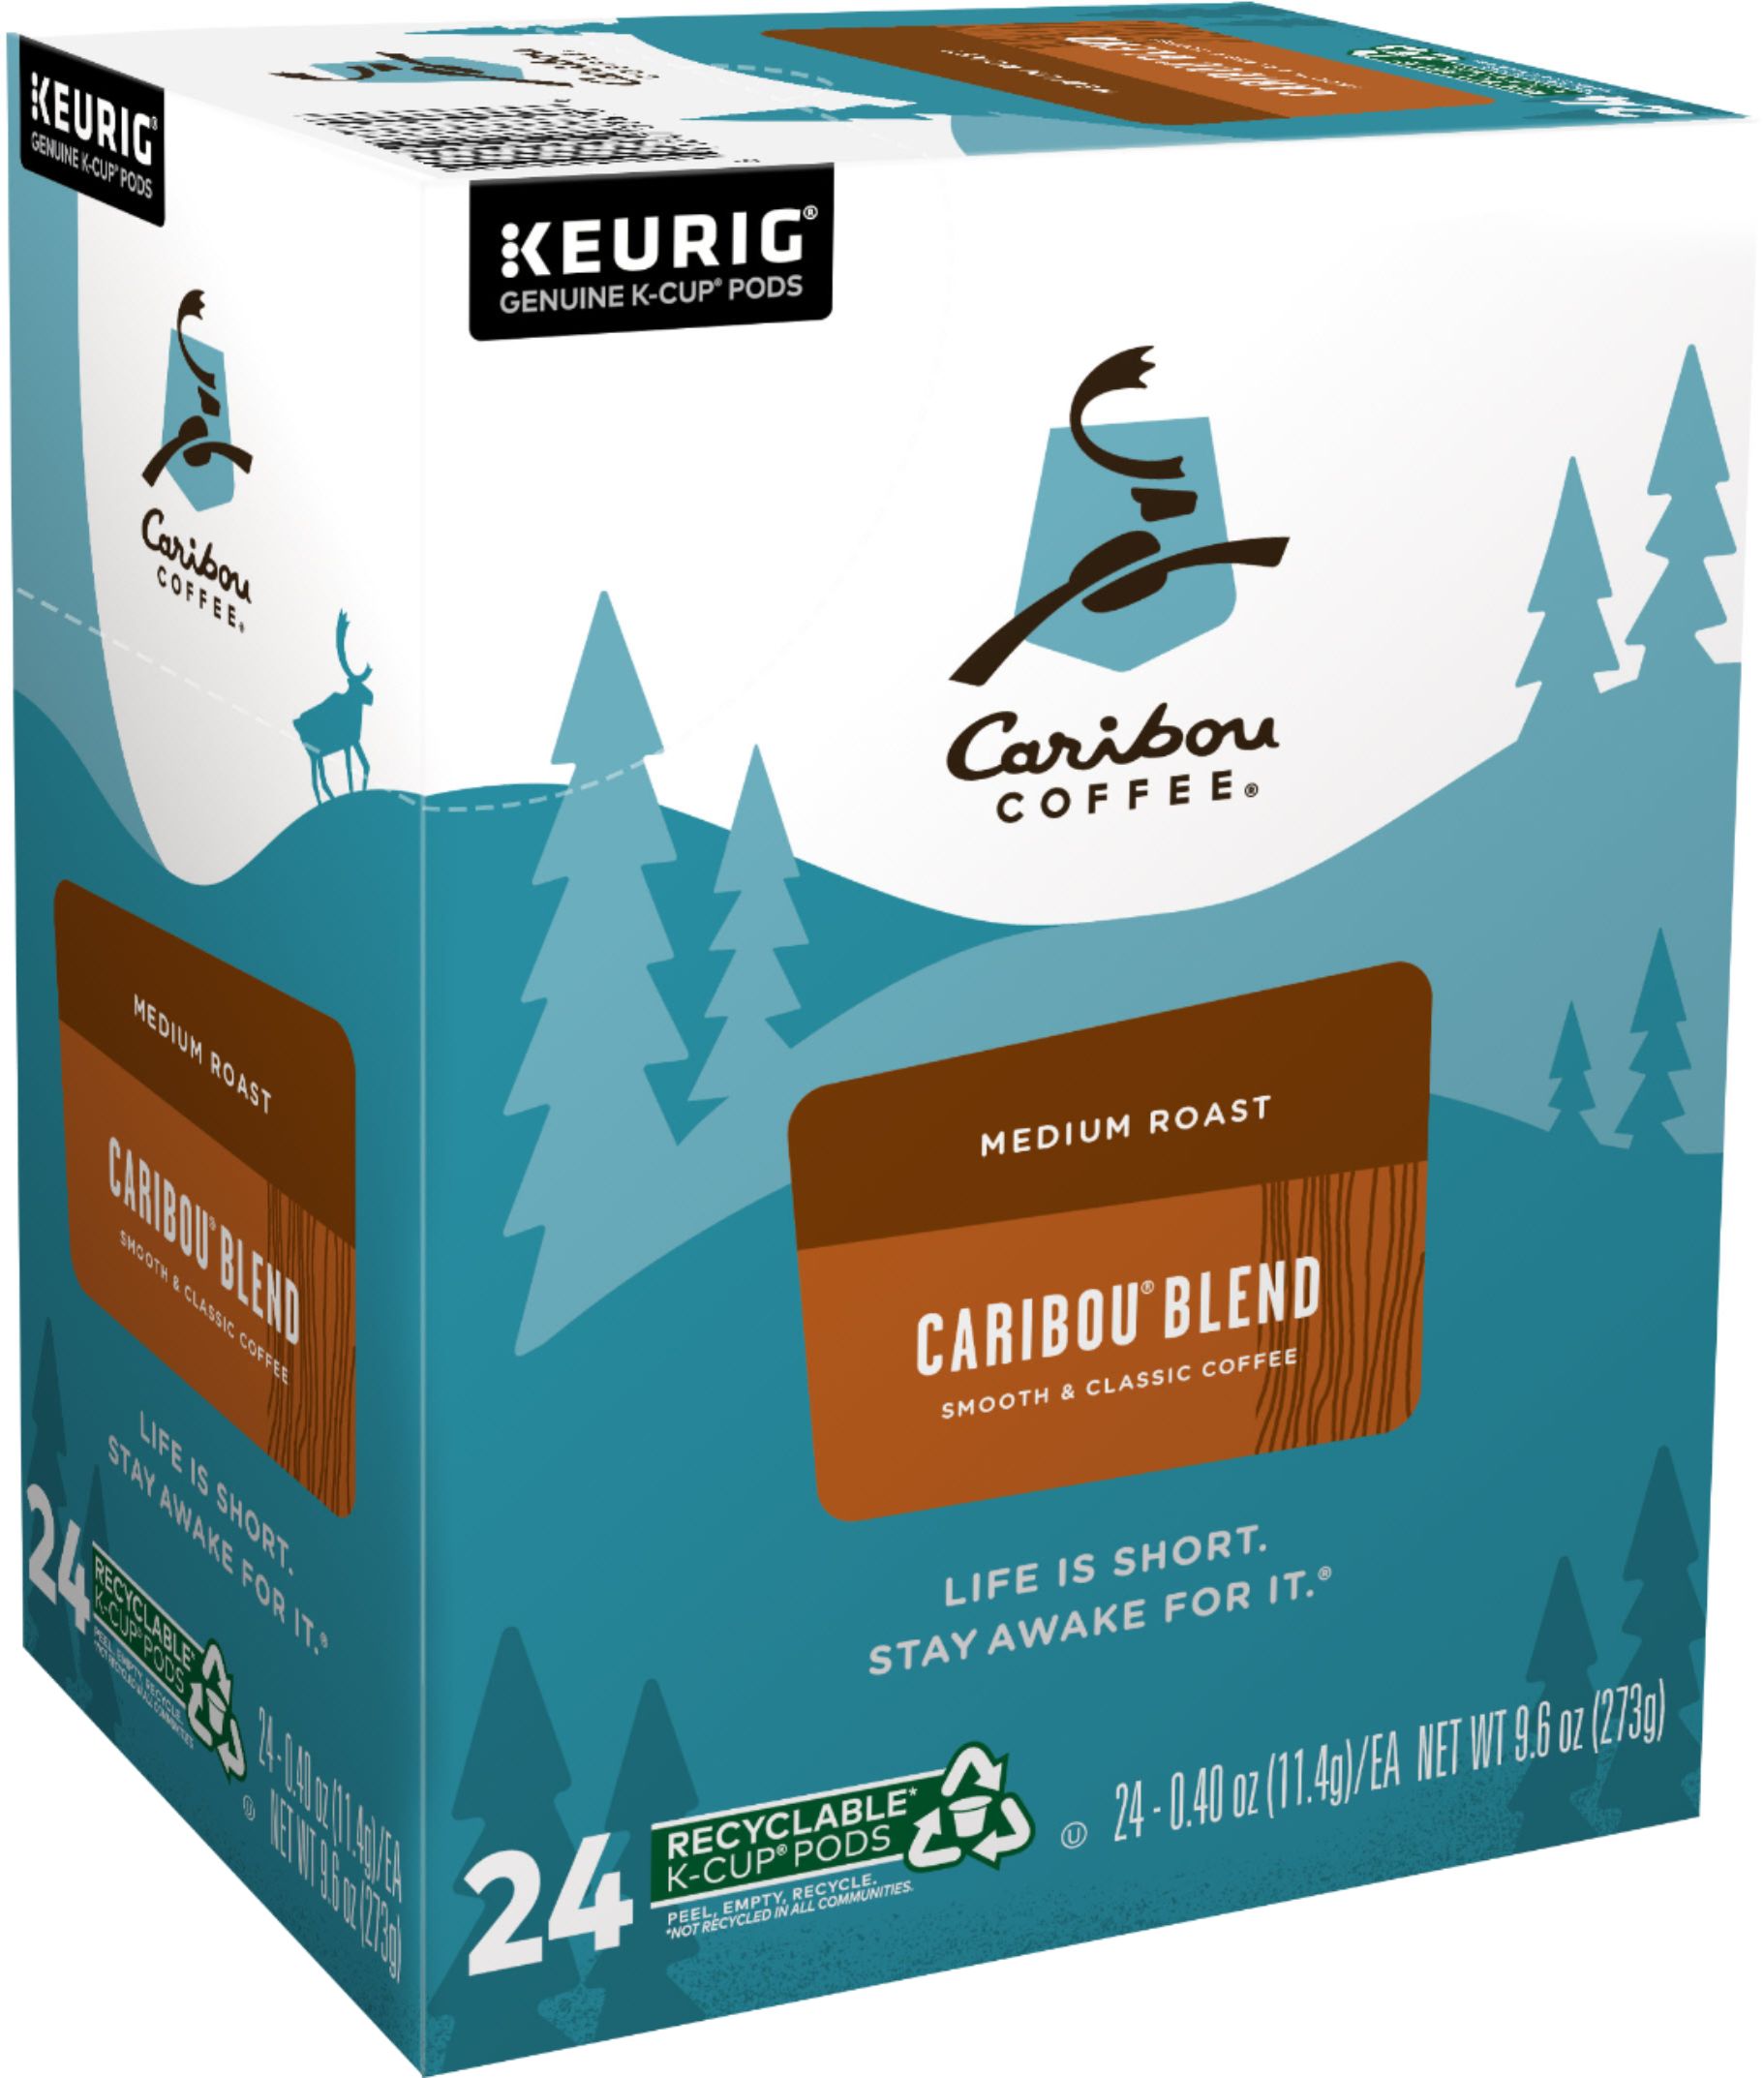 Caribou Obsidian K-Cup Coffee - 24 Ct. Box - Kitchen & Company